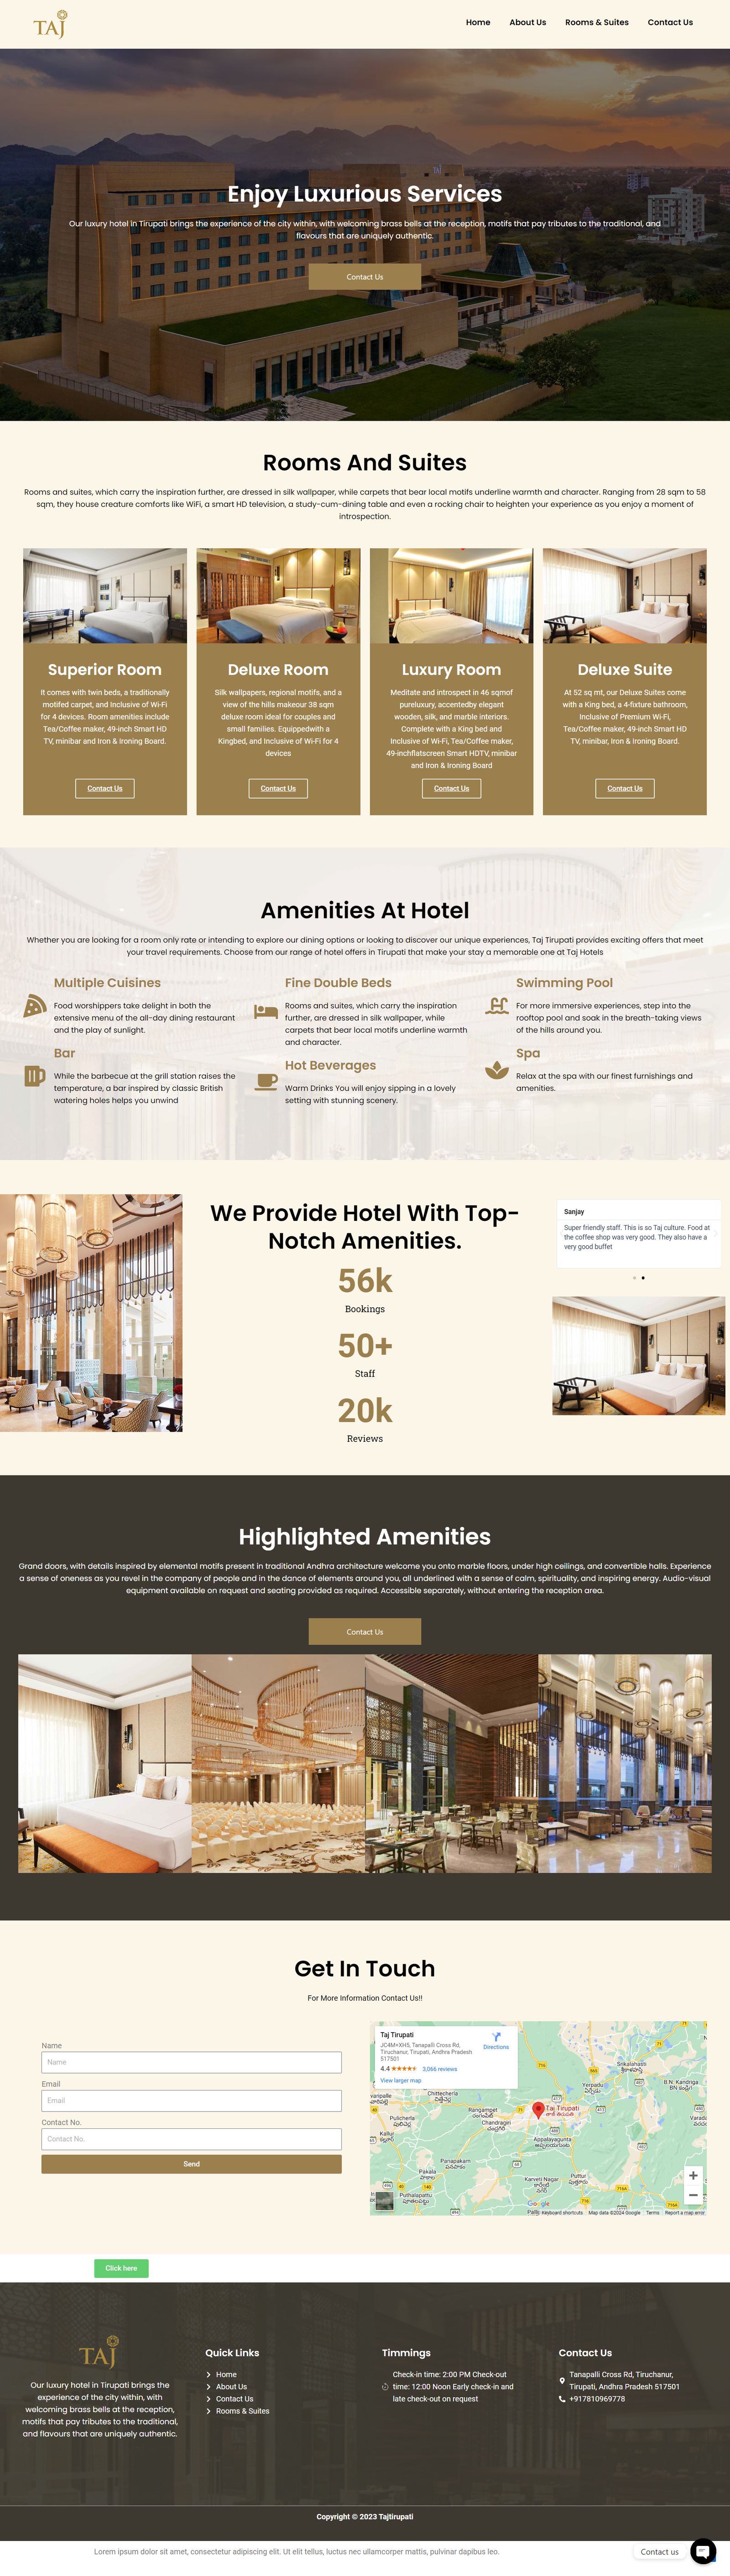 the taj hotel website